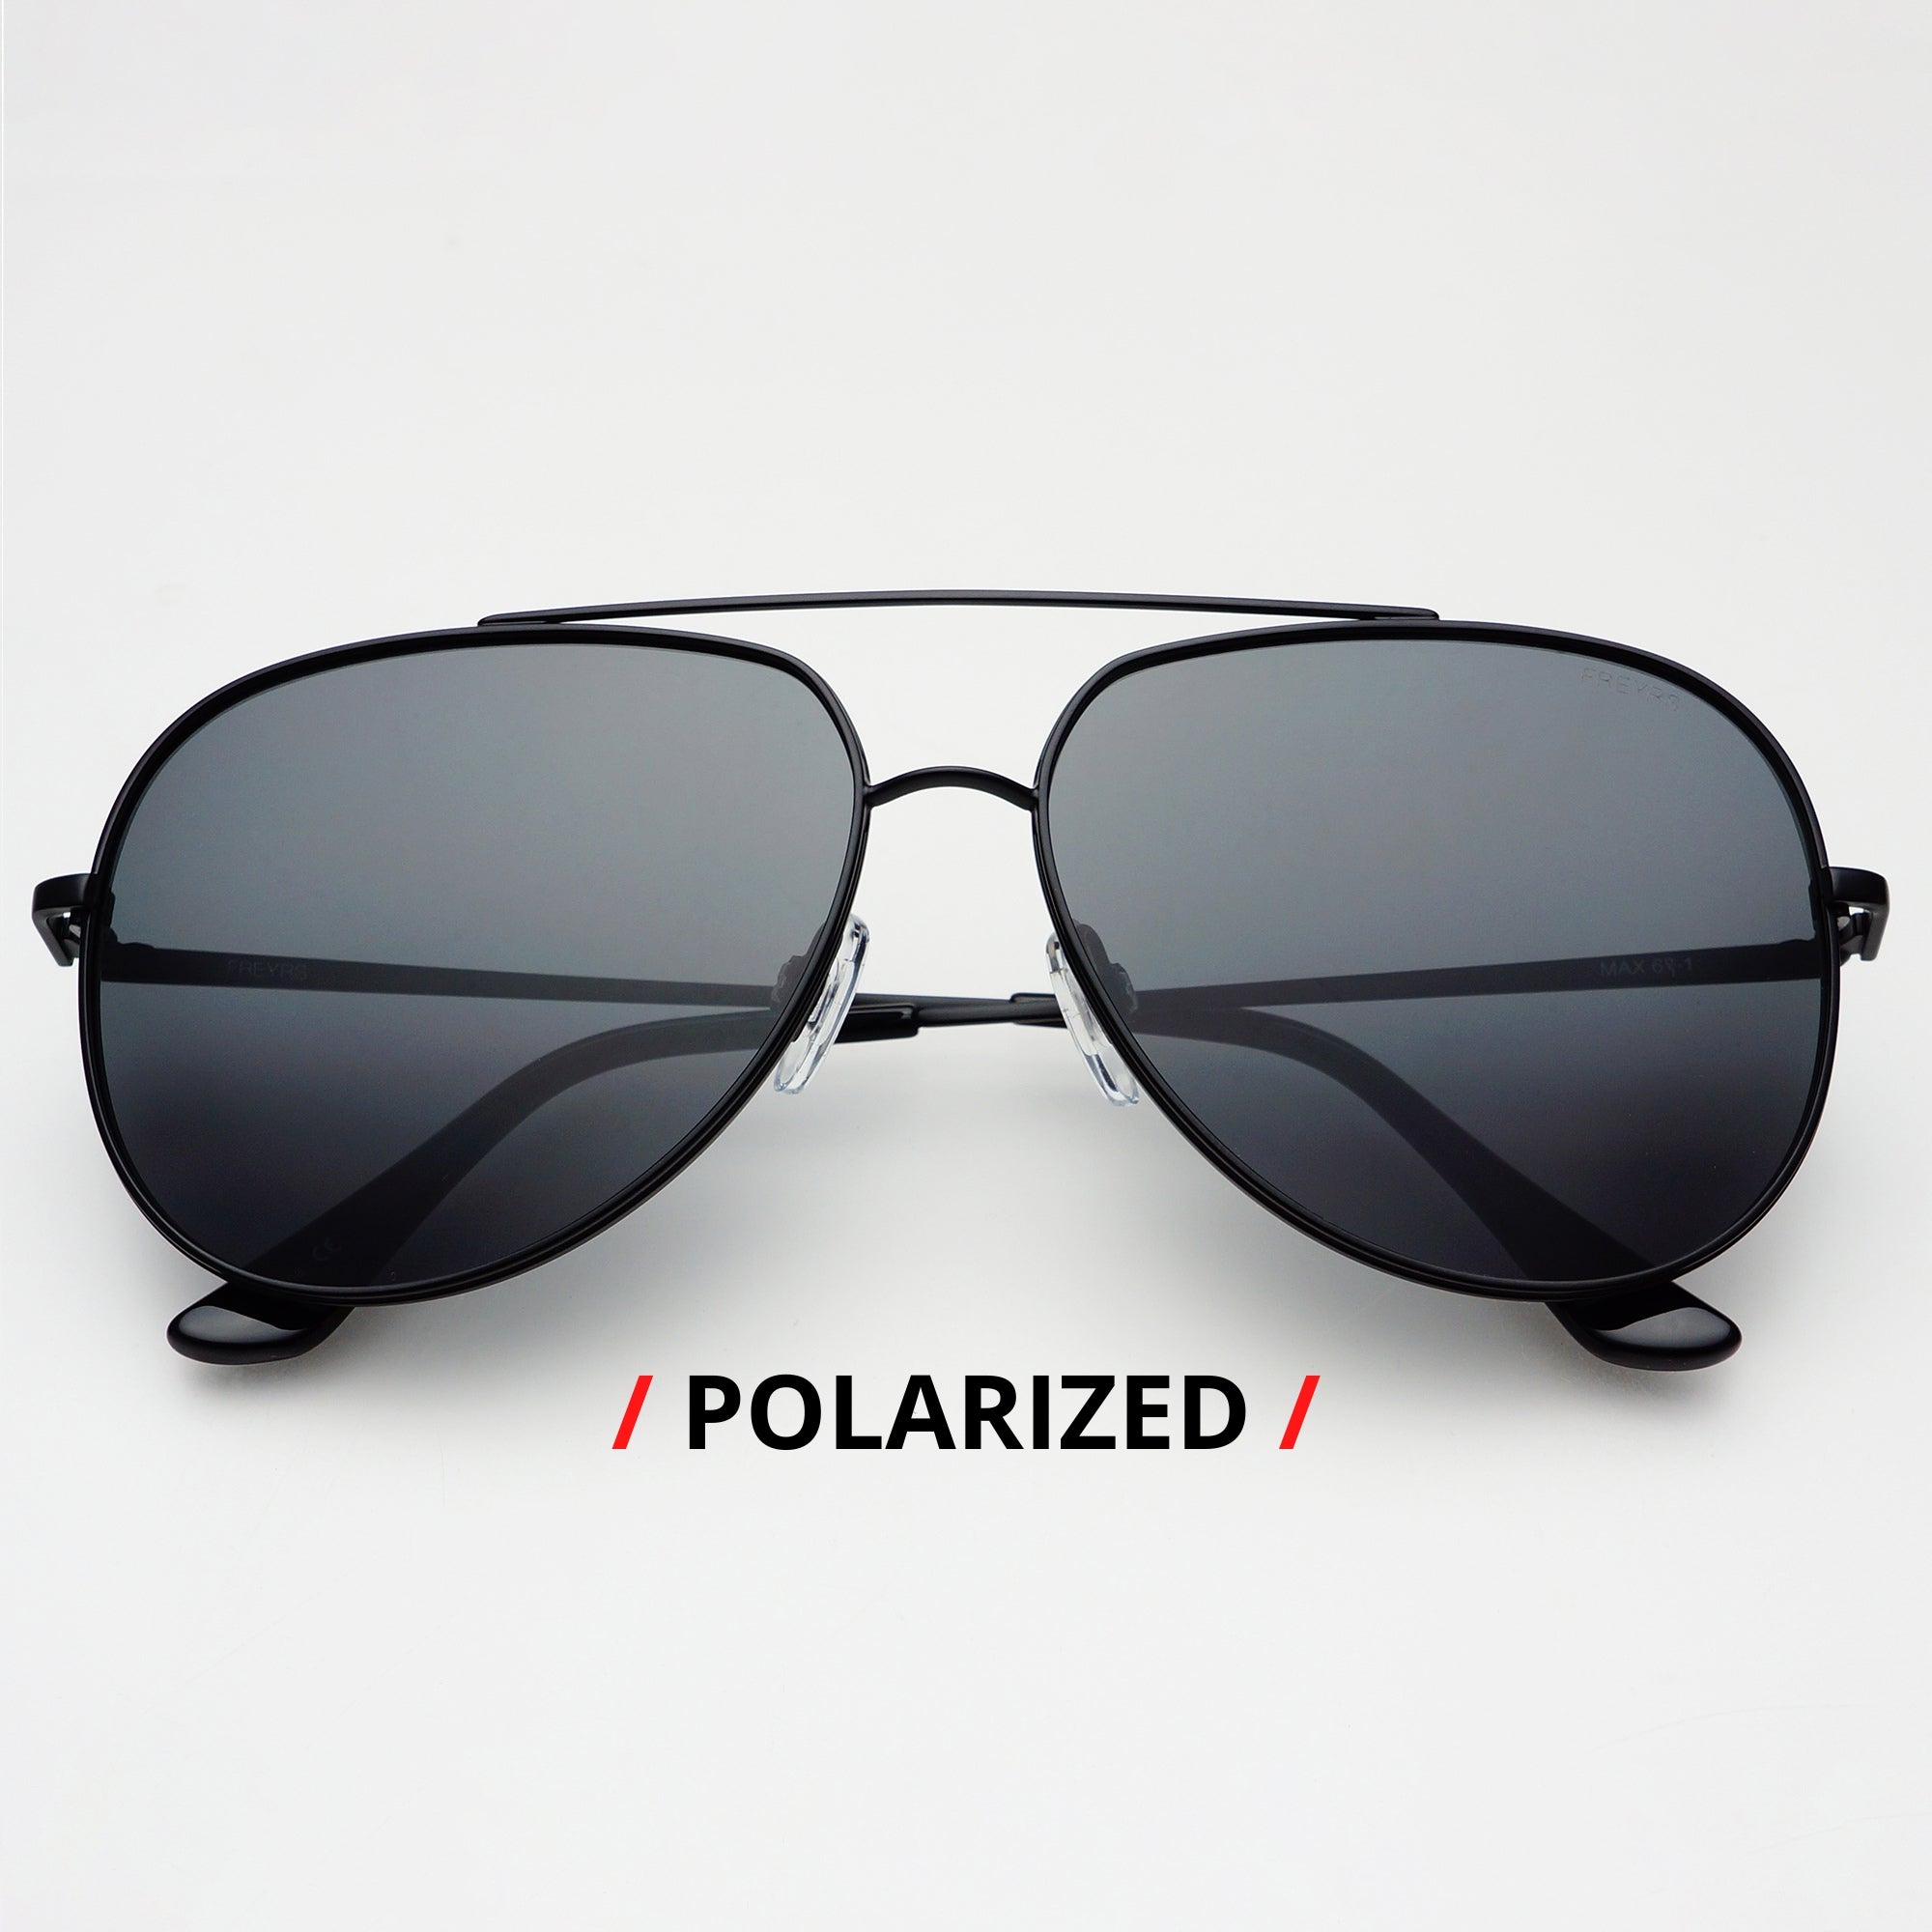 Buy Joe Black Aviator Sunglasses (Matte Black)(JB-705-C3|59) at Amazon.in